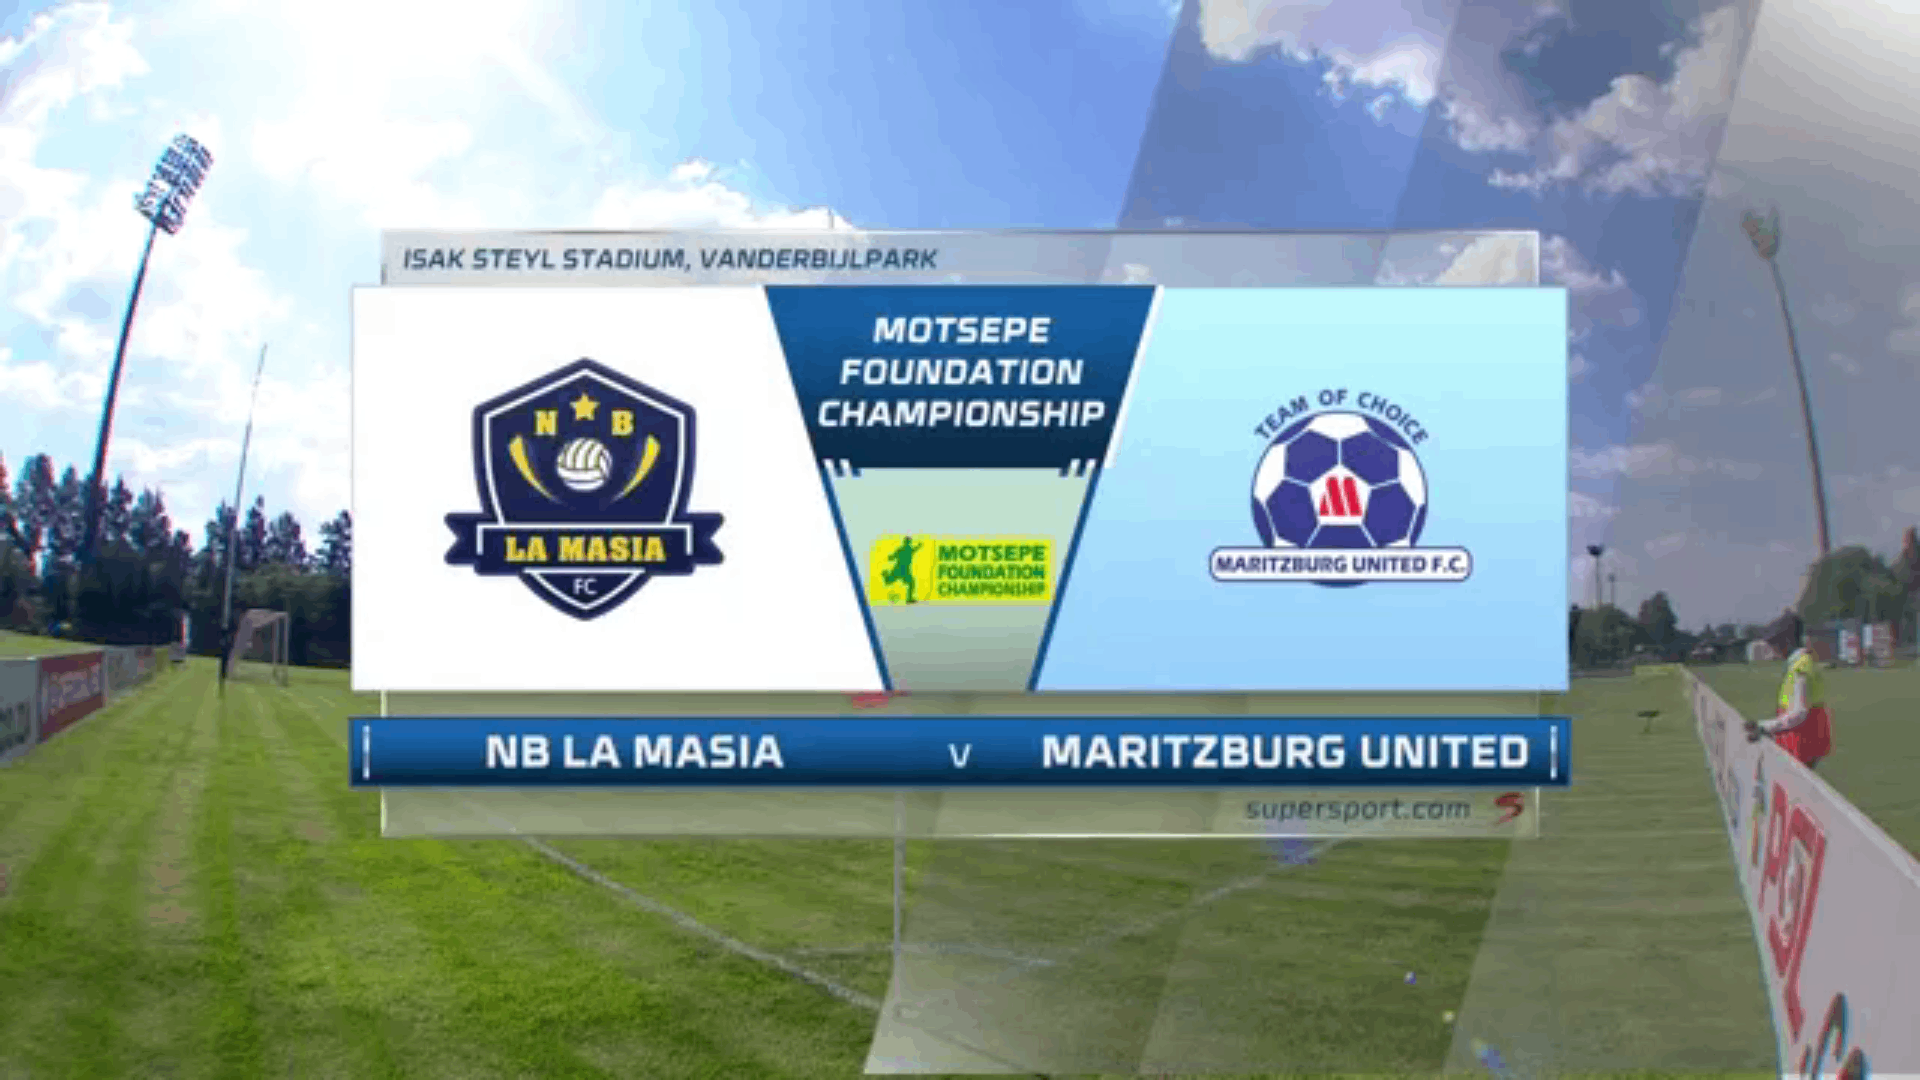 NB La Masia v Maritzburg United | Match Highlights | Motsepe Foundation Championship